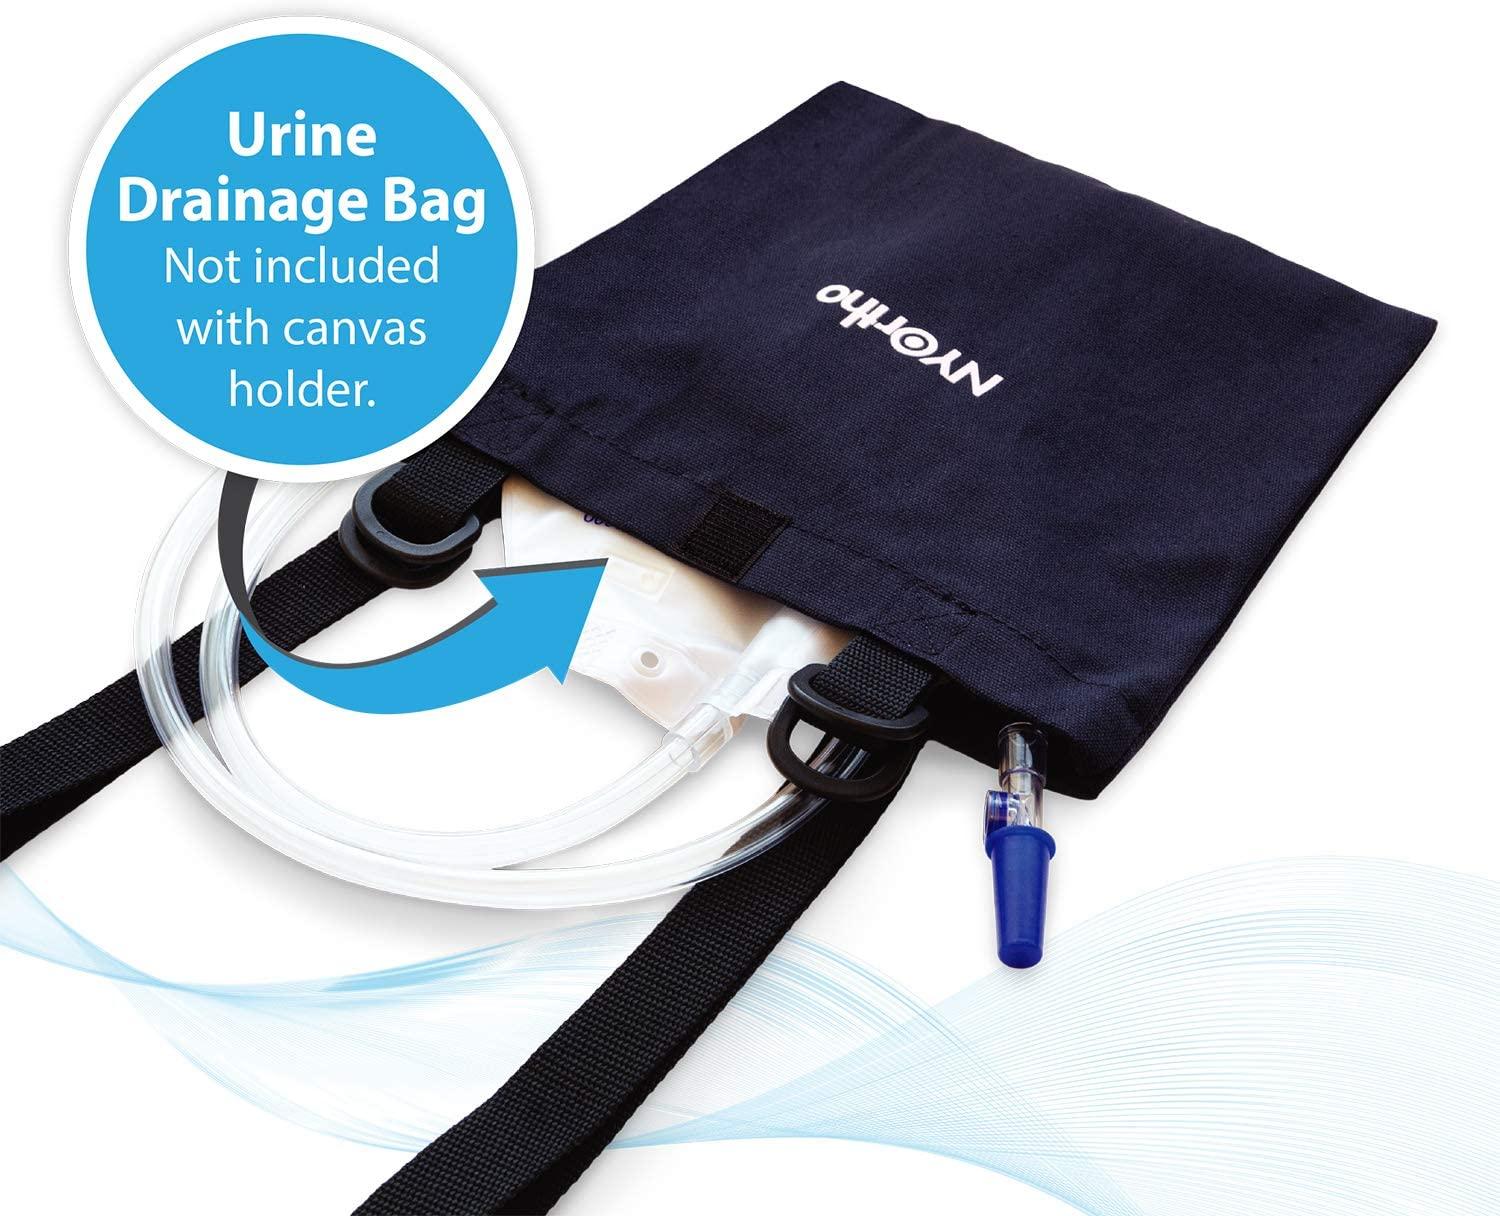 Urine Drainage Bag